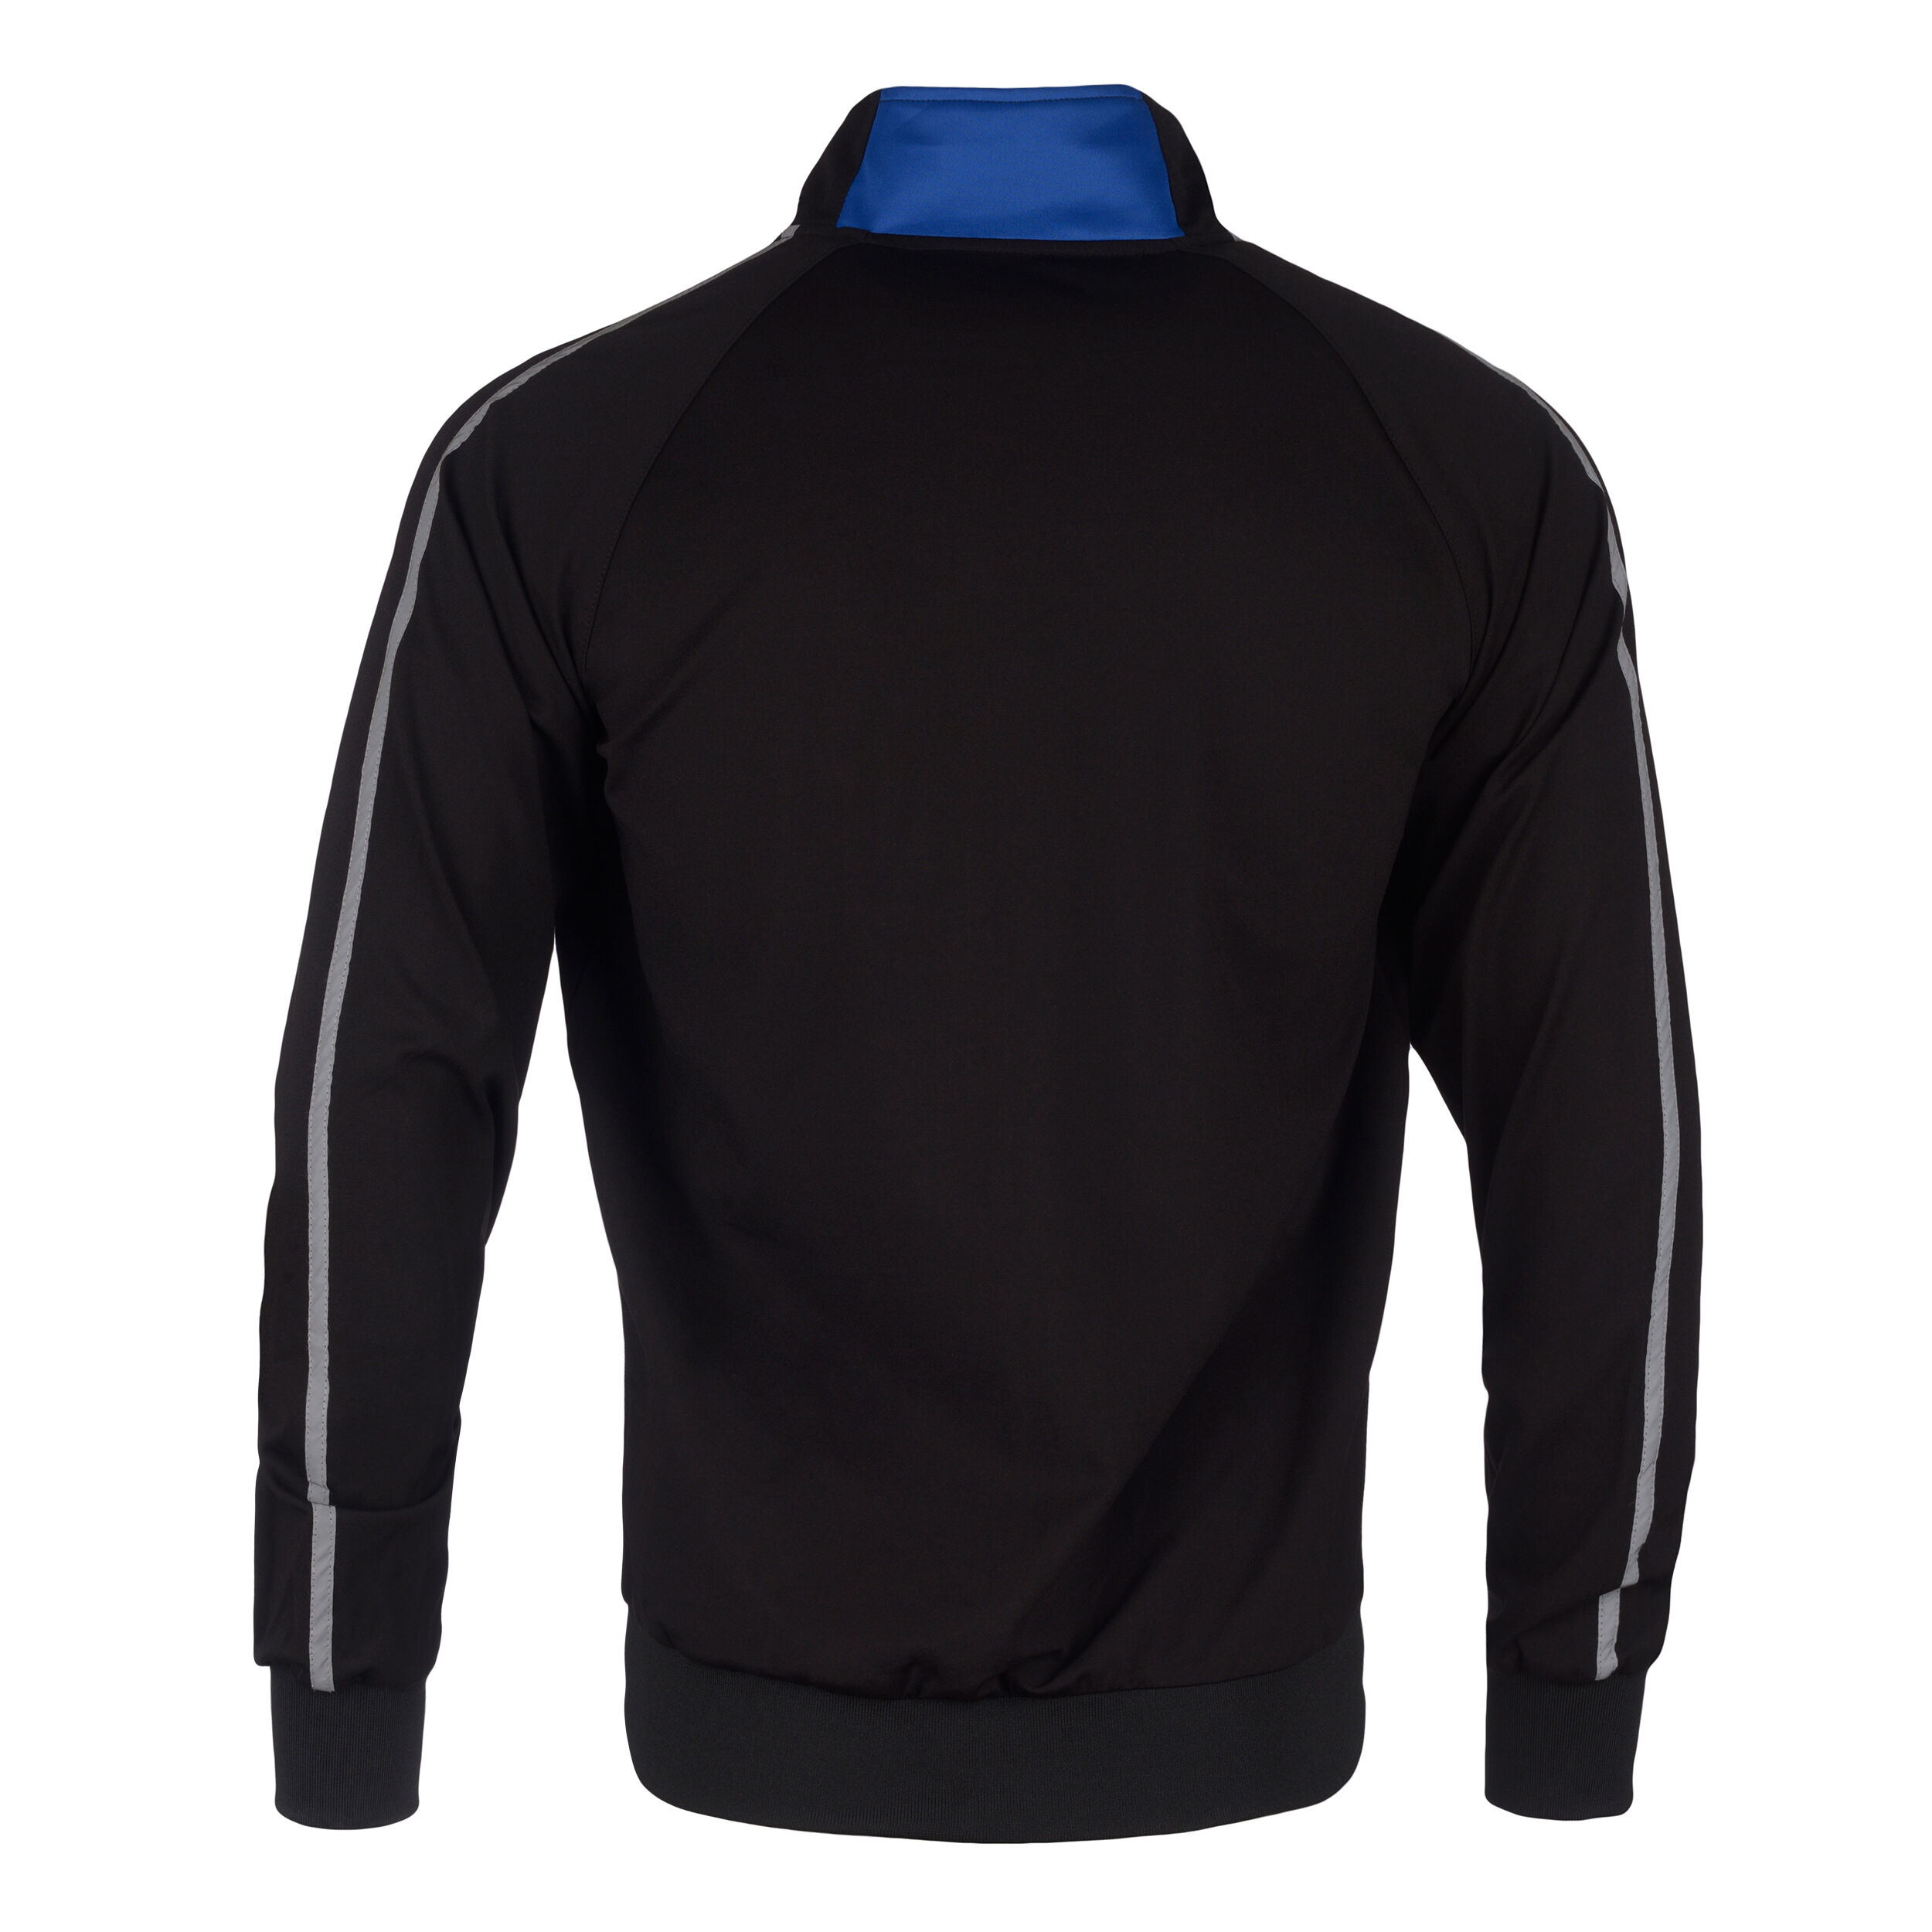 Dunlop Herren Performance Warm Up Jacket  Trainingsjacke schwarz NEU 